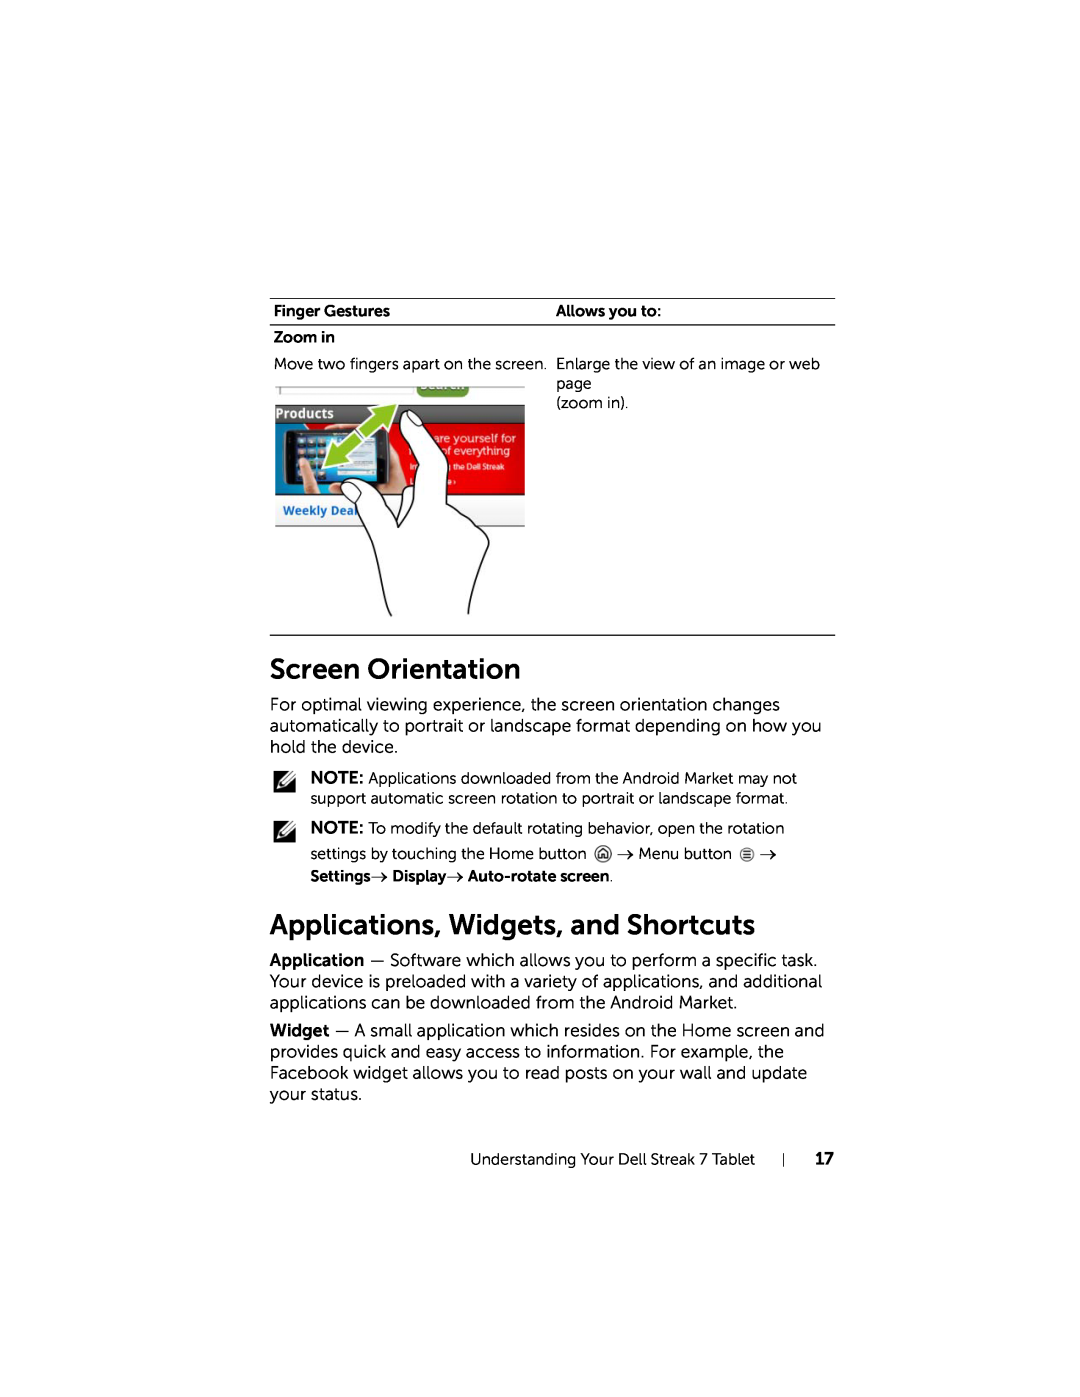 Dell 7 user manual Screen Orientation, Applications, Widgets, and Shortcuts 